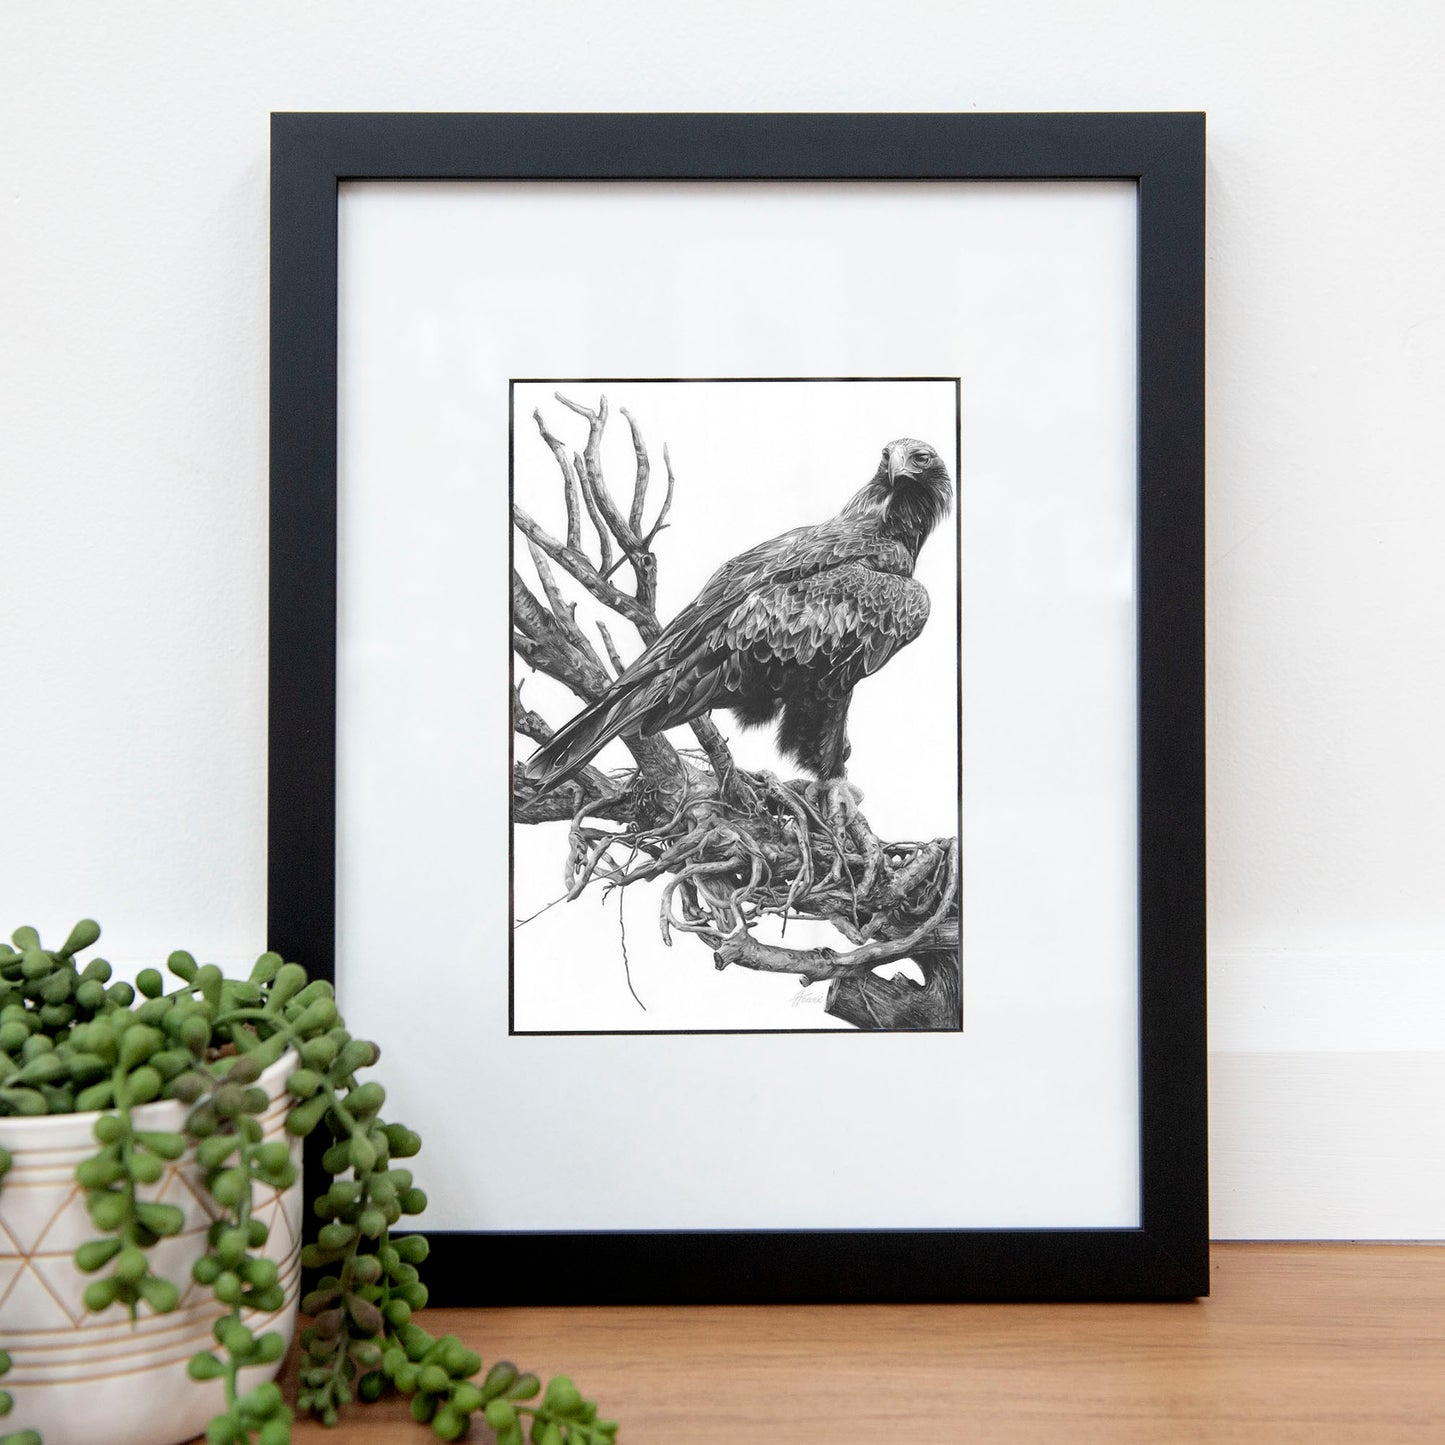 'Wedge-tailed Eagle' A5 art card